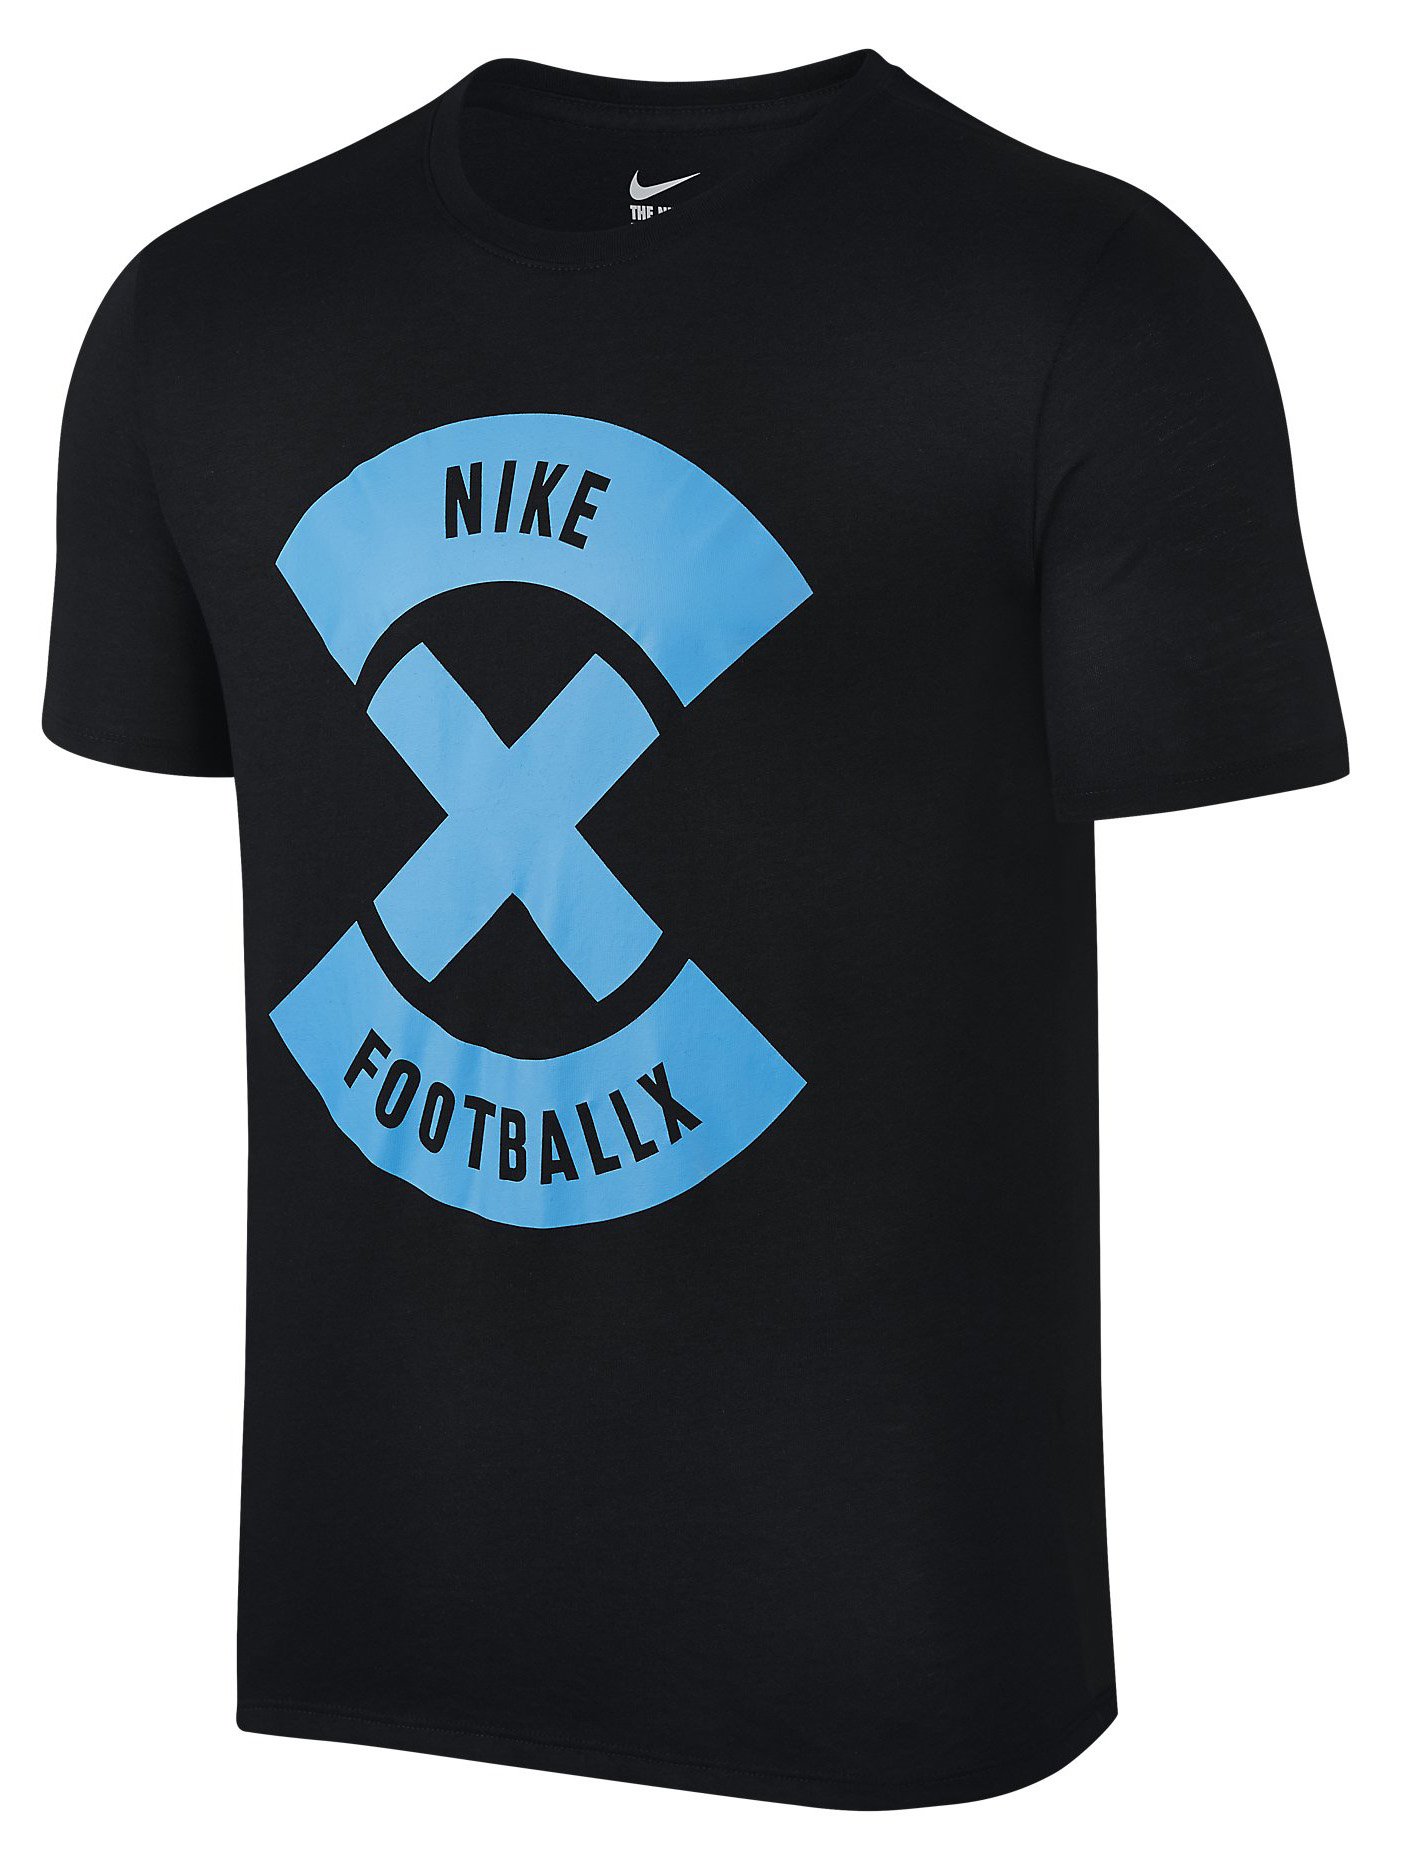 Camiseta Nike FOOTBALL X GLOW